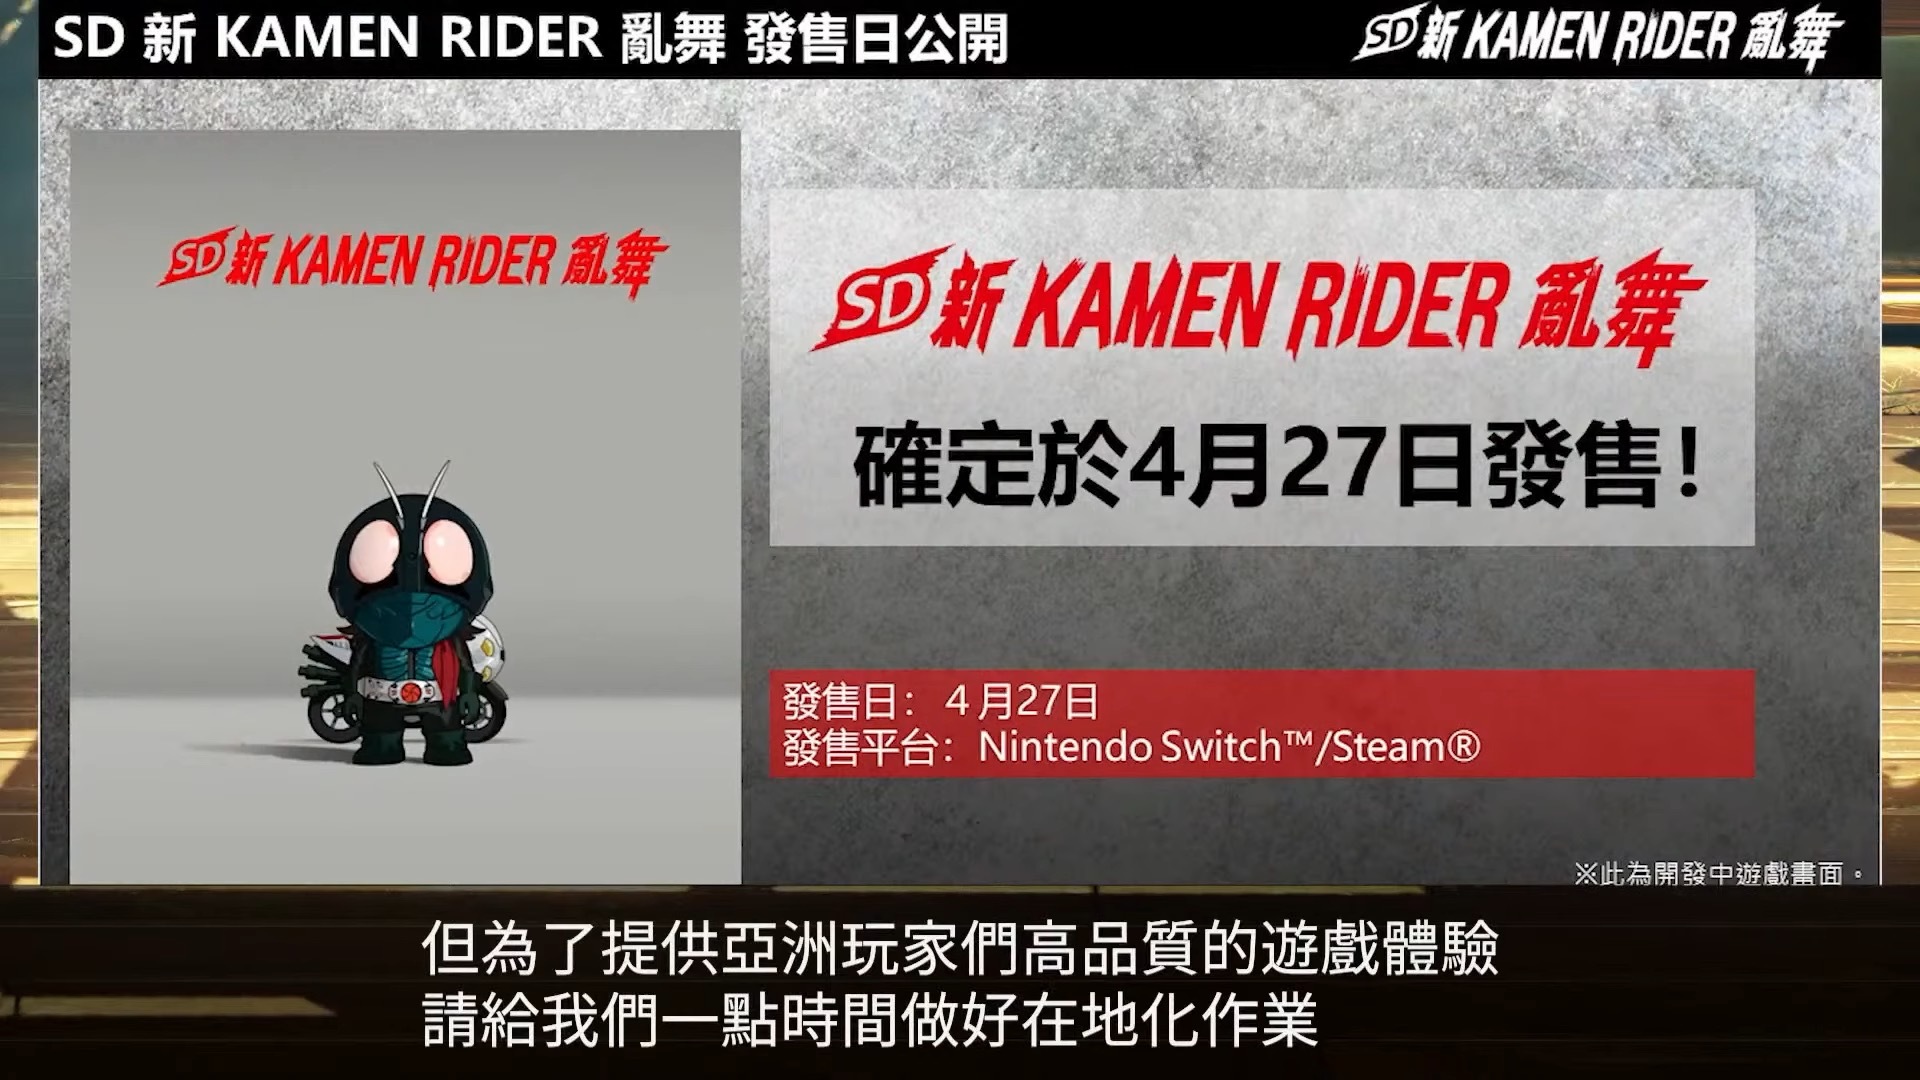 《SD 新 KAMEN RIDER 乱舞》中文版发售日确定 同步释出实机游玩画面插图4